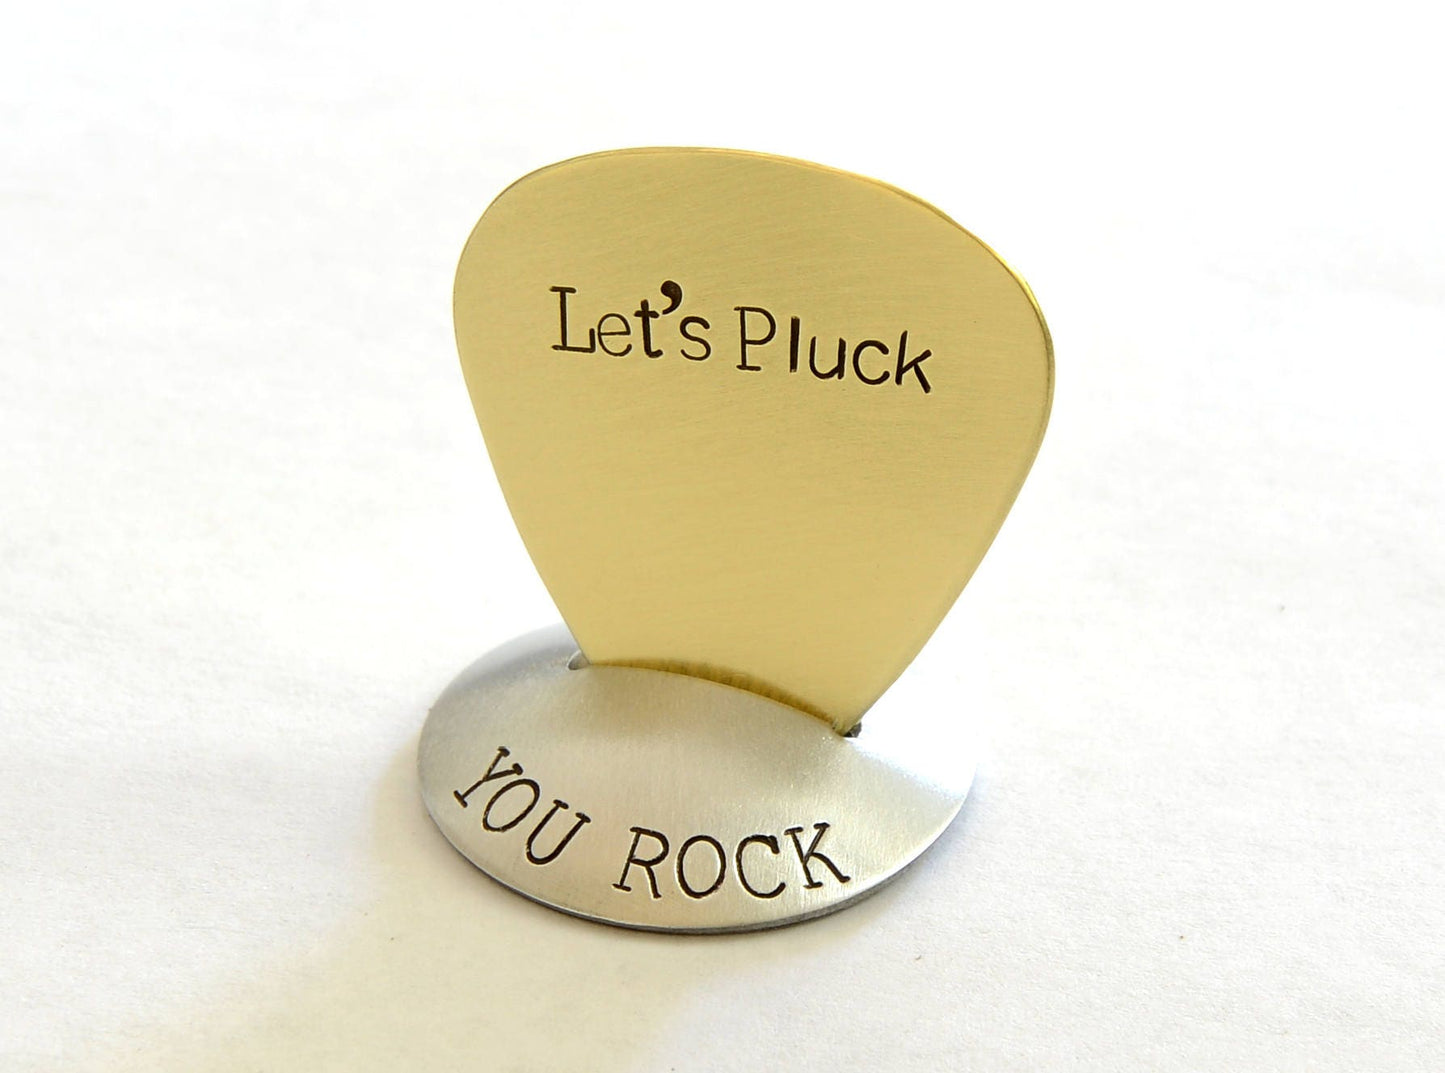 Let’s Pluck brass guitar pick